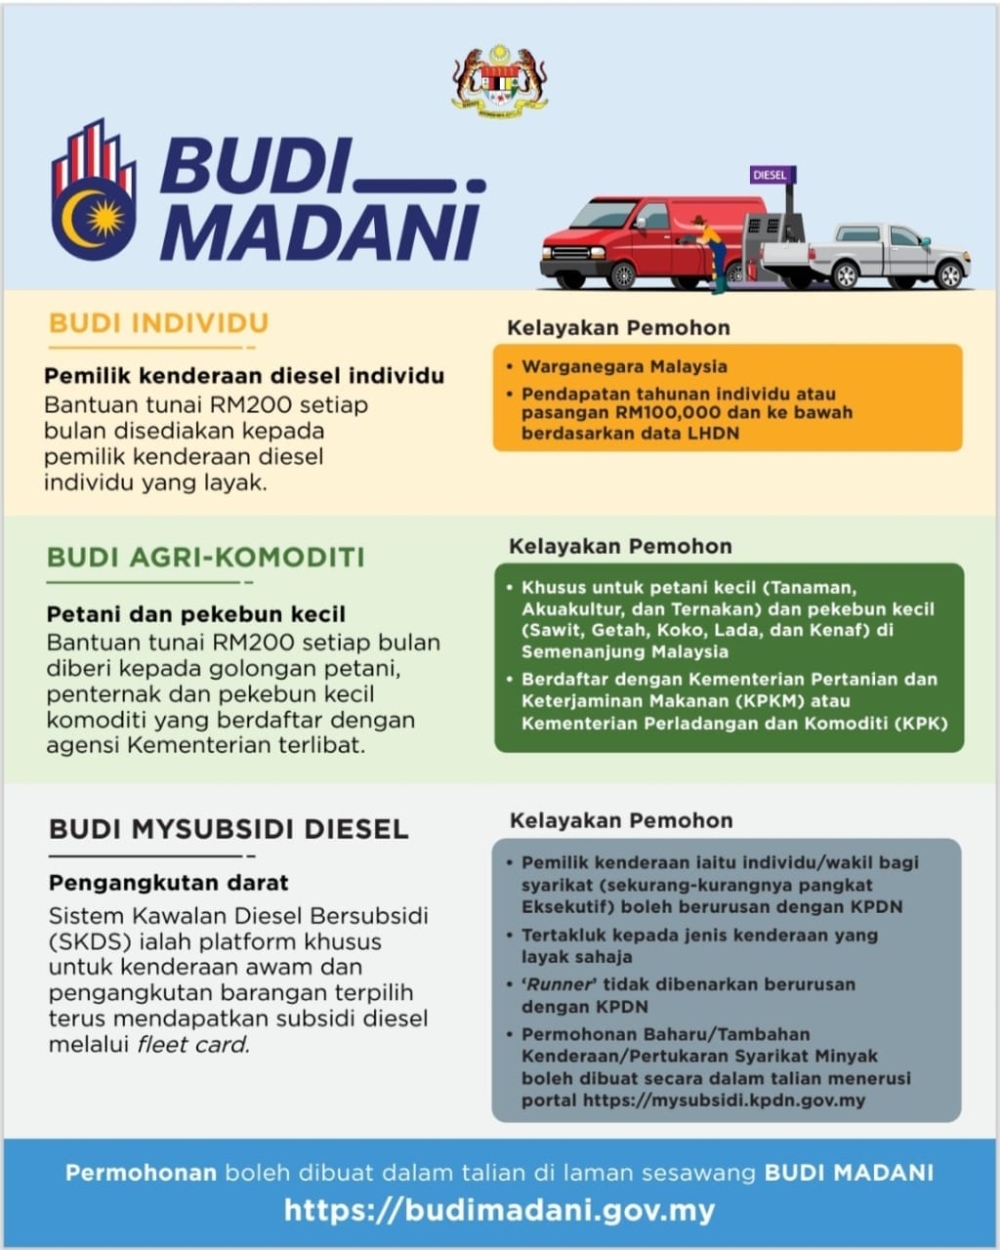 Diesel price Malaysia - Figure 4